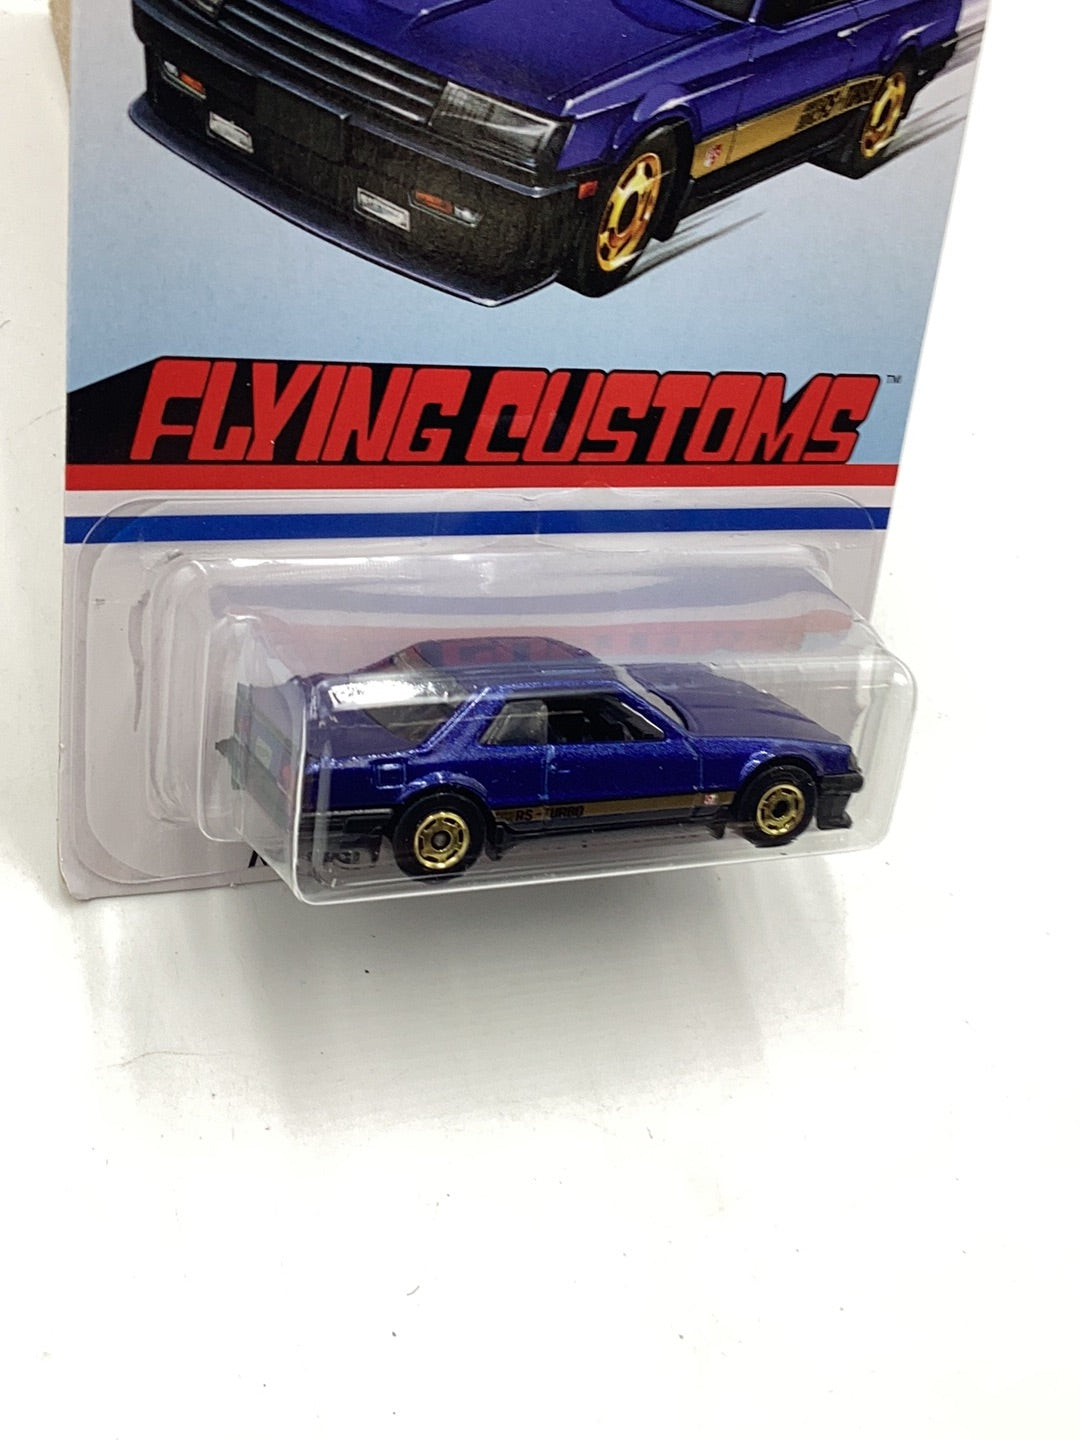 Hot wheels flying customs Nissan Skyline RS R30